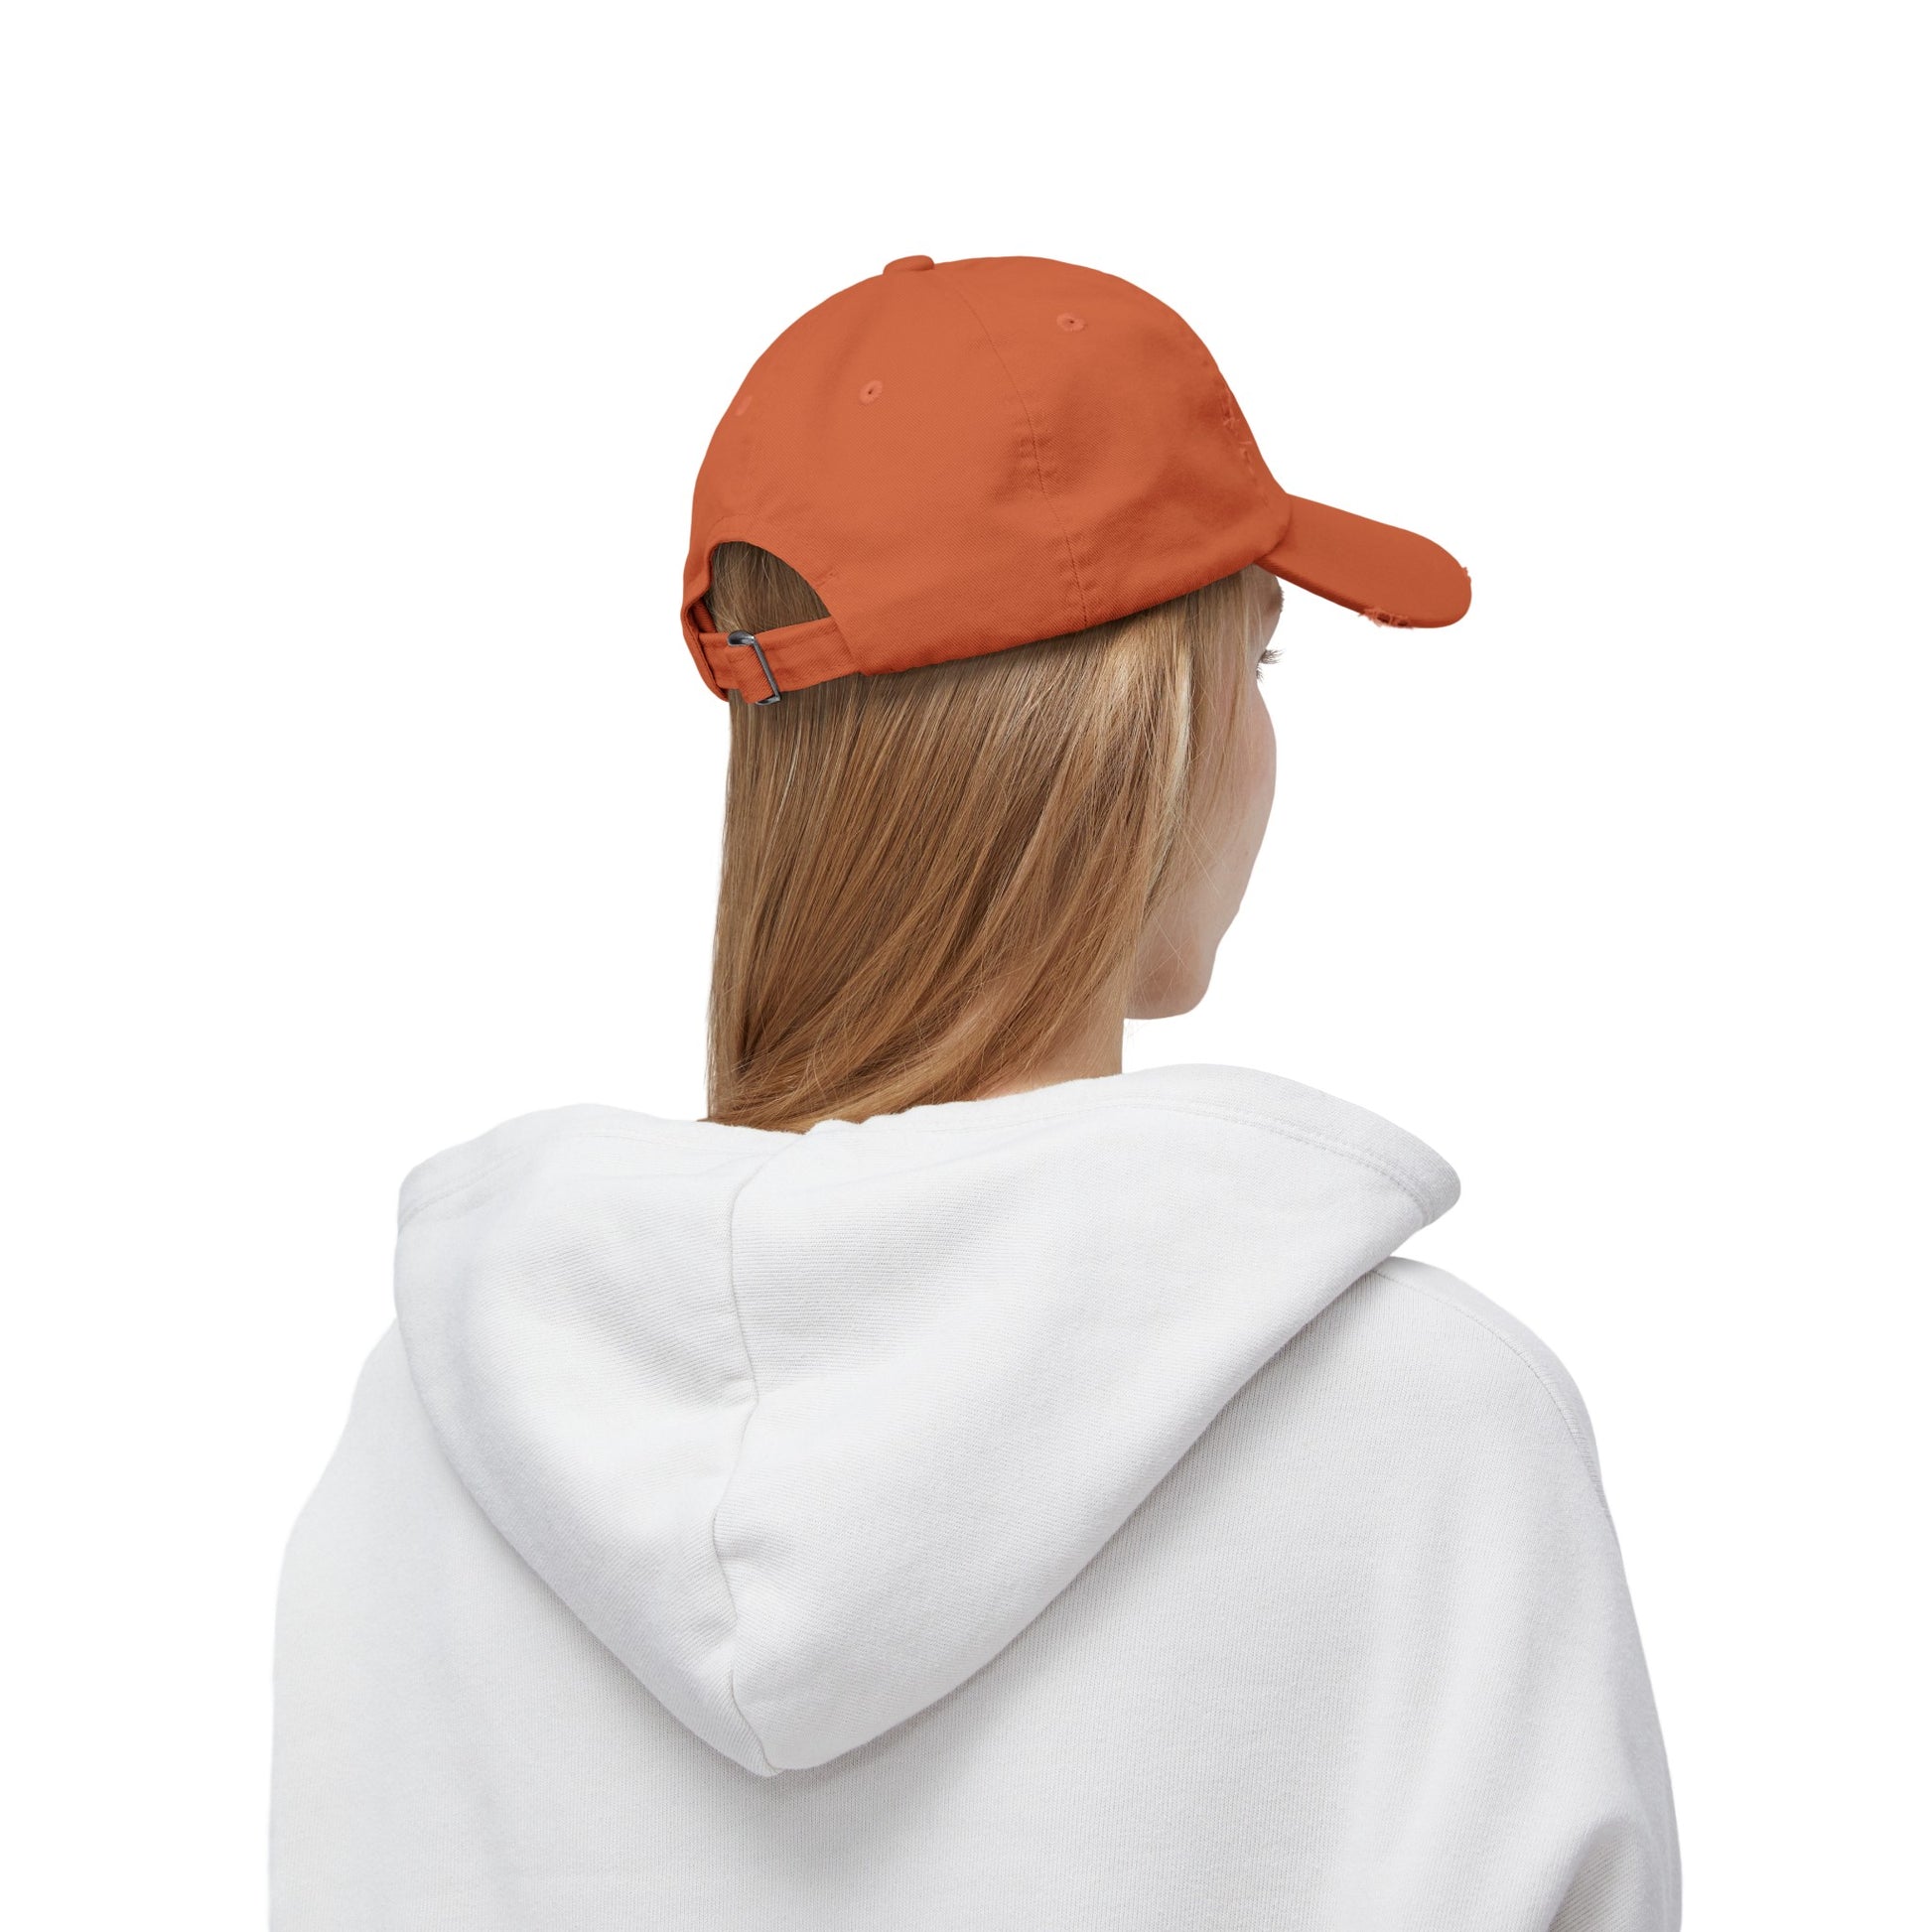 a woman wearing an orange hat and a white sweatshirt